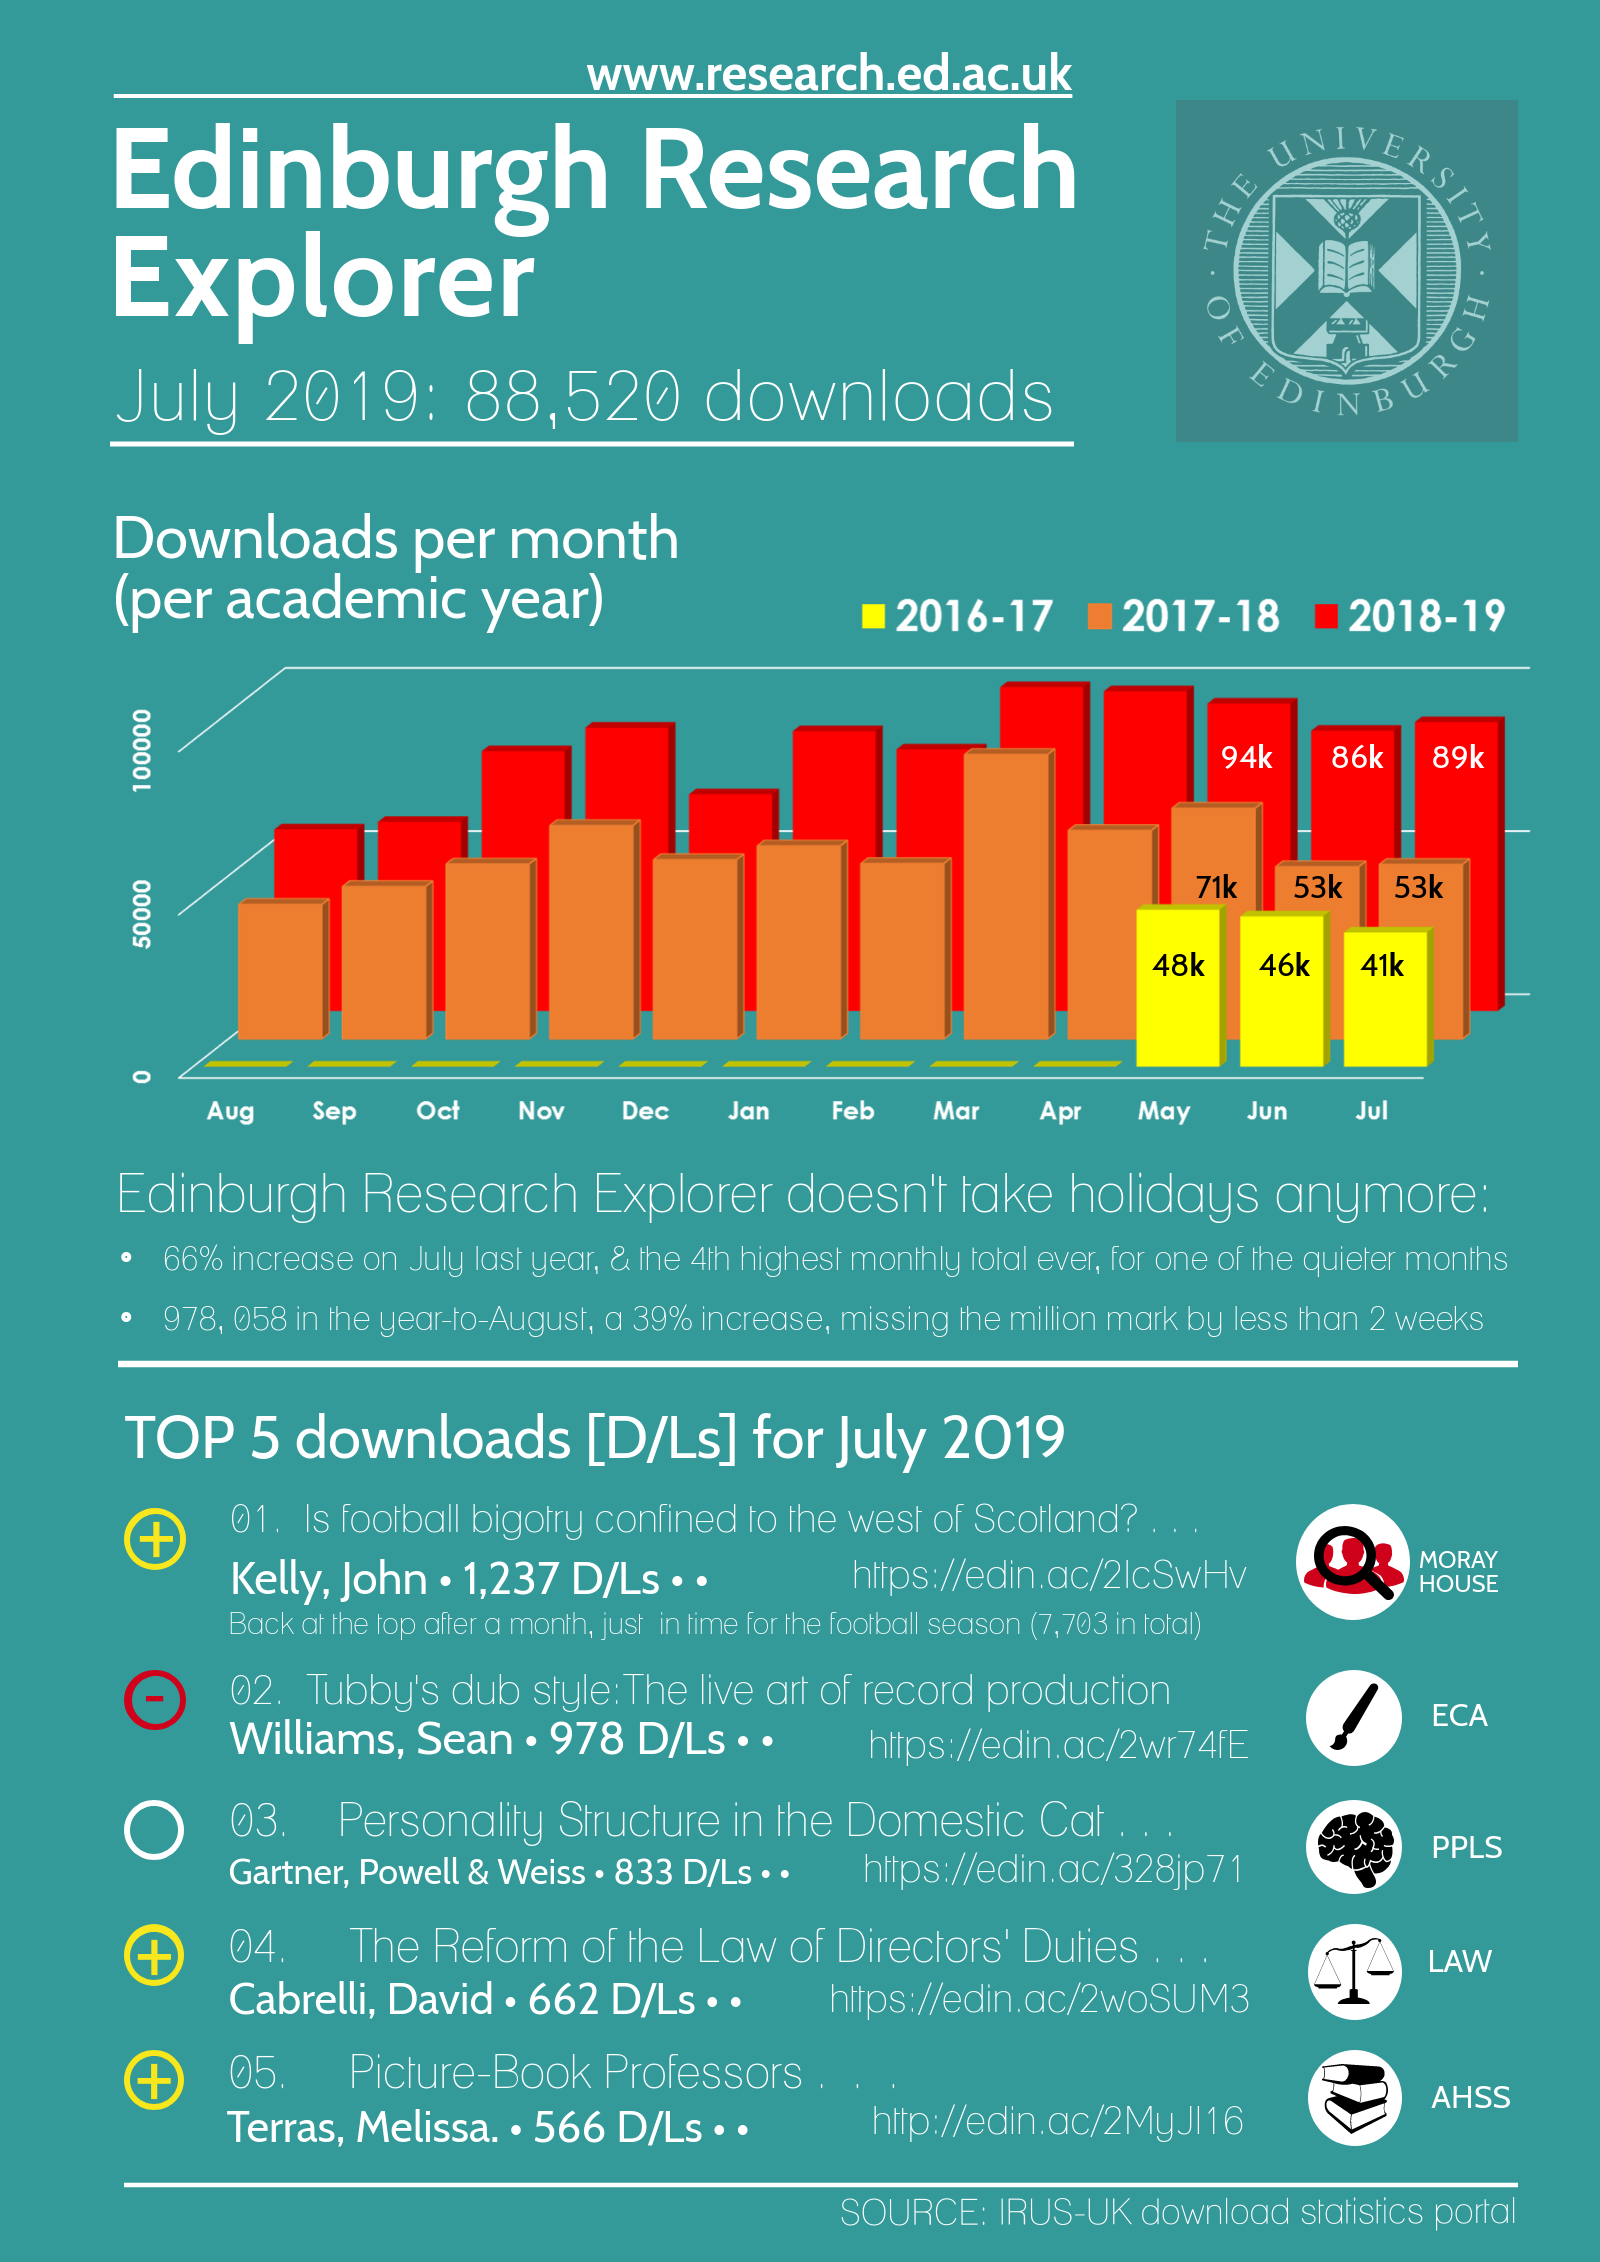 Edinburgh Research Explorer: July 2019 downloads infographic - Chart: Downloads per month (per academic year) 2016-2019